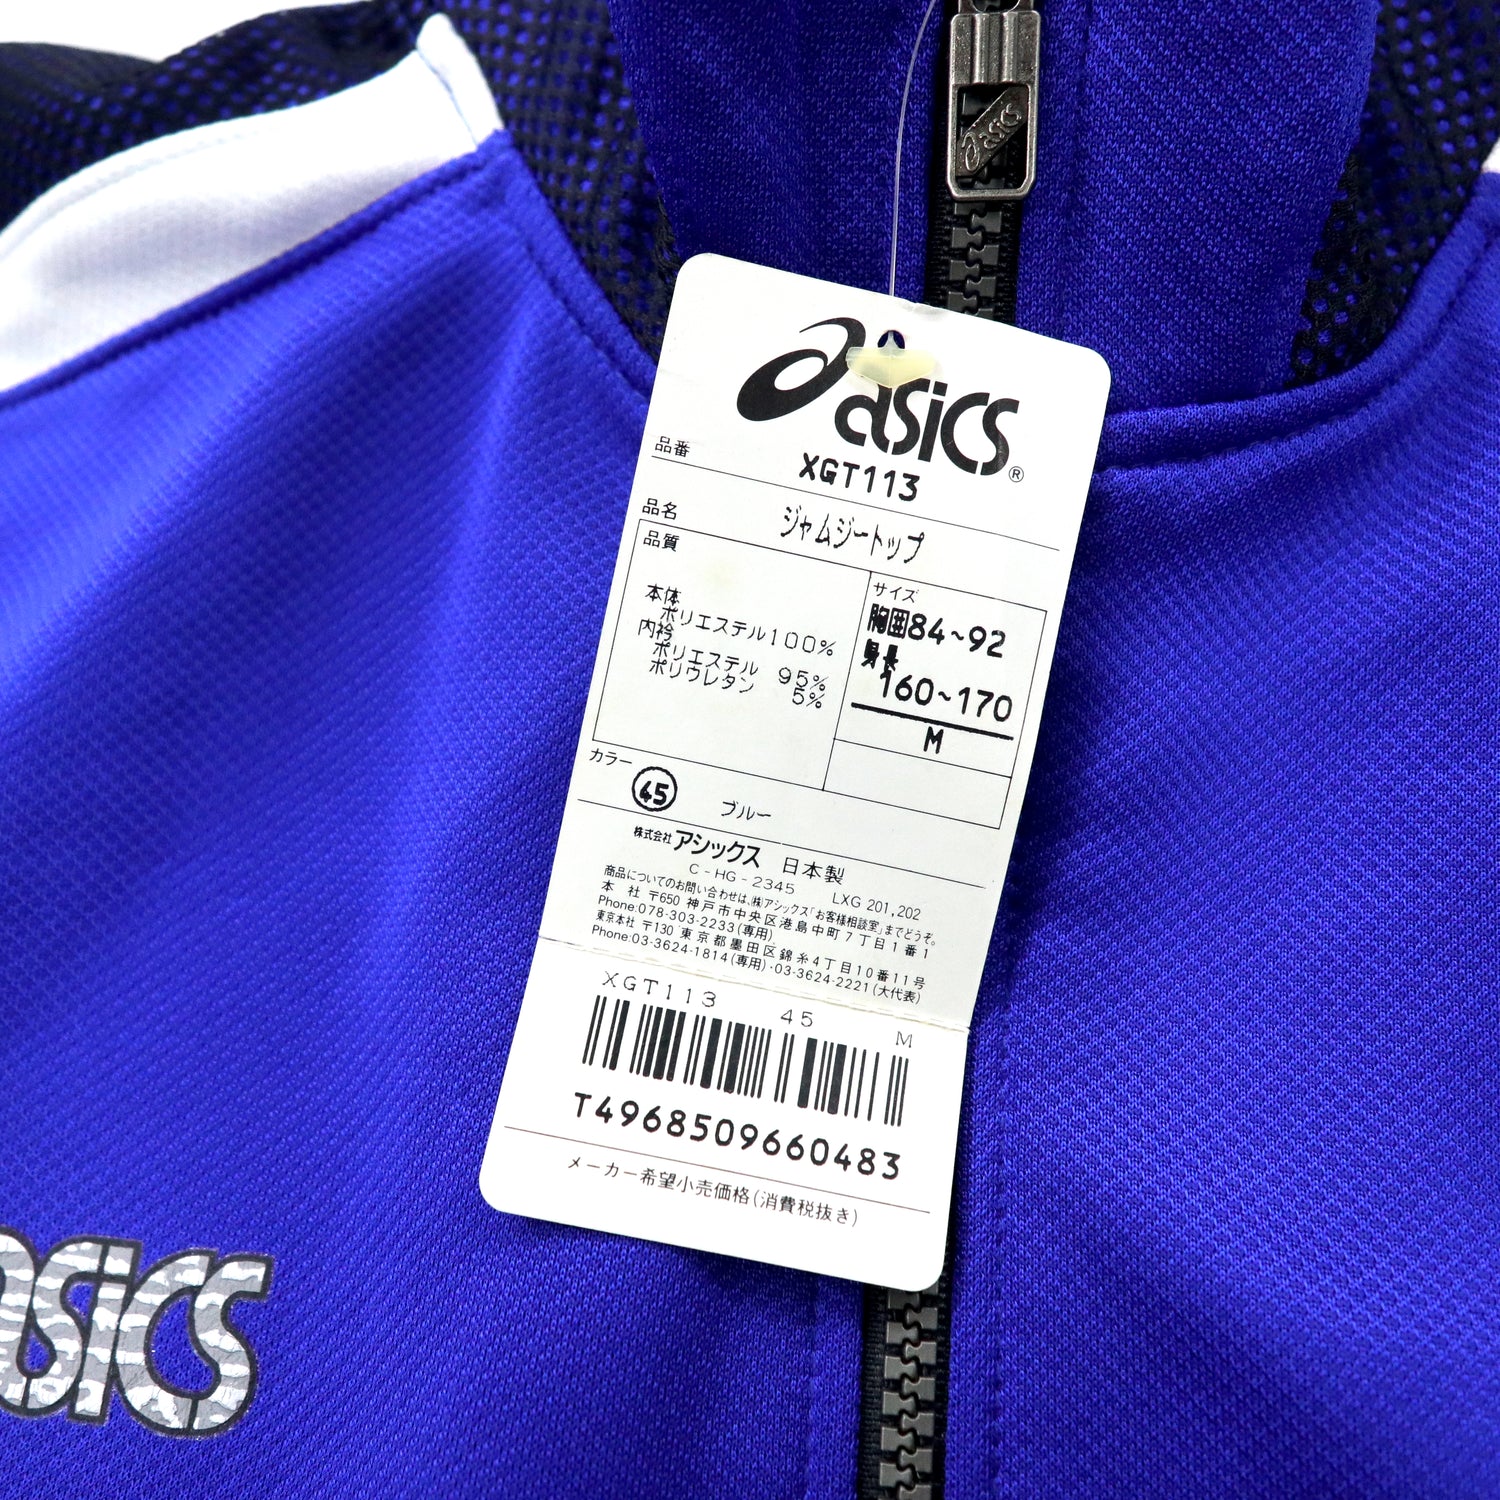 ASICS 90's TRACKET Jersey M Blue Polyester Big Size Japan